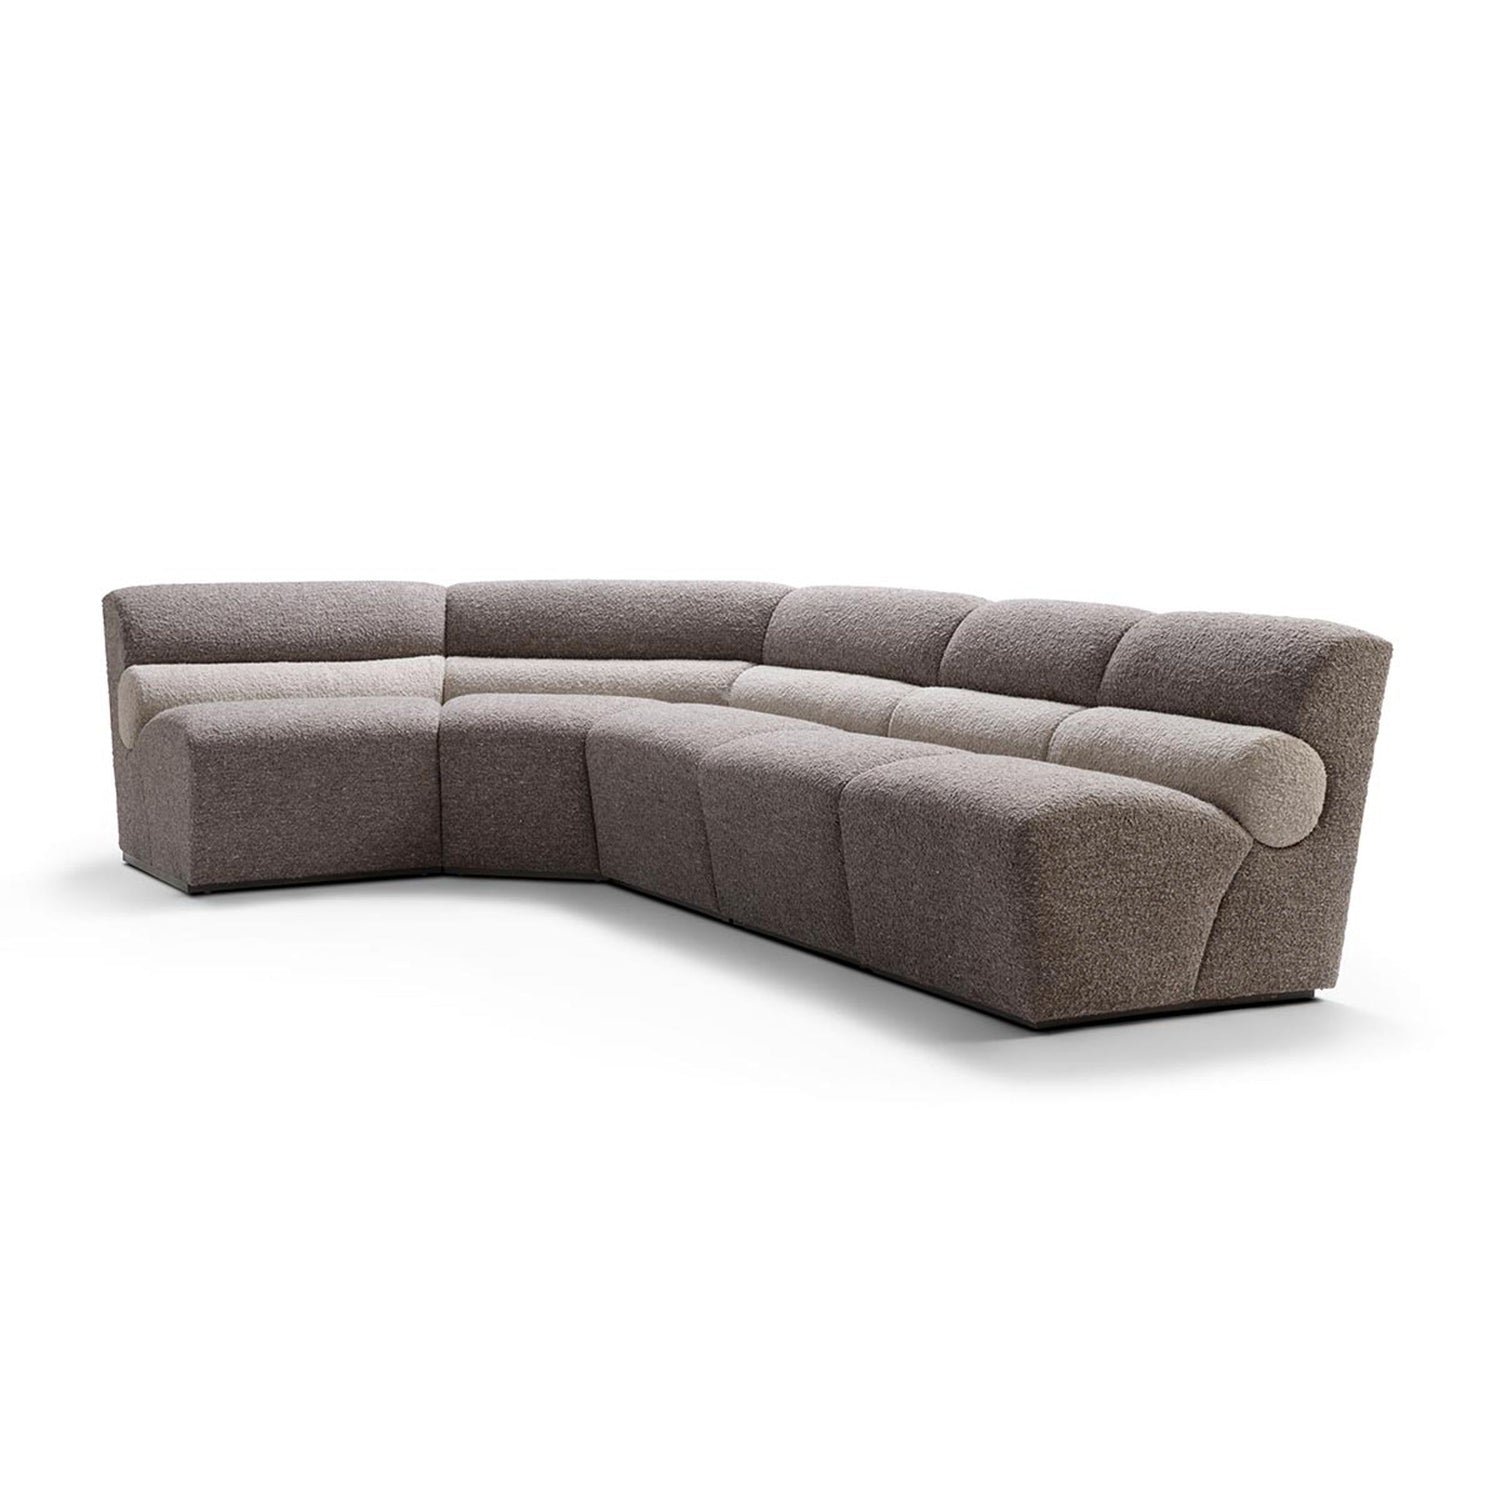 The Davids Modular Sofa - Corner Configuration (5 Piece)